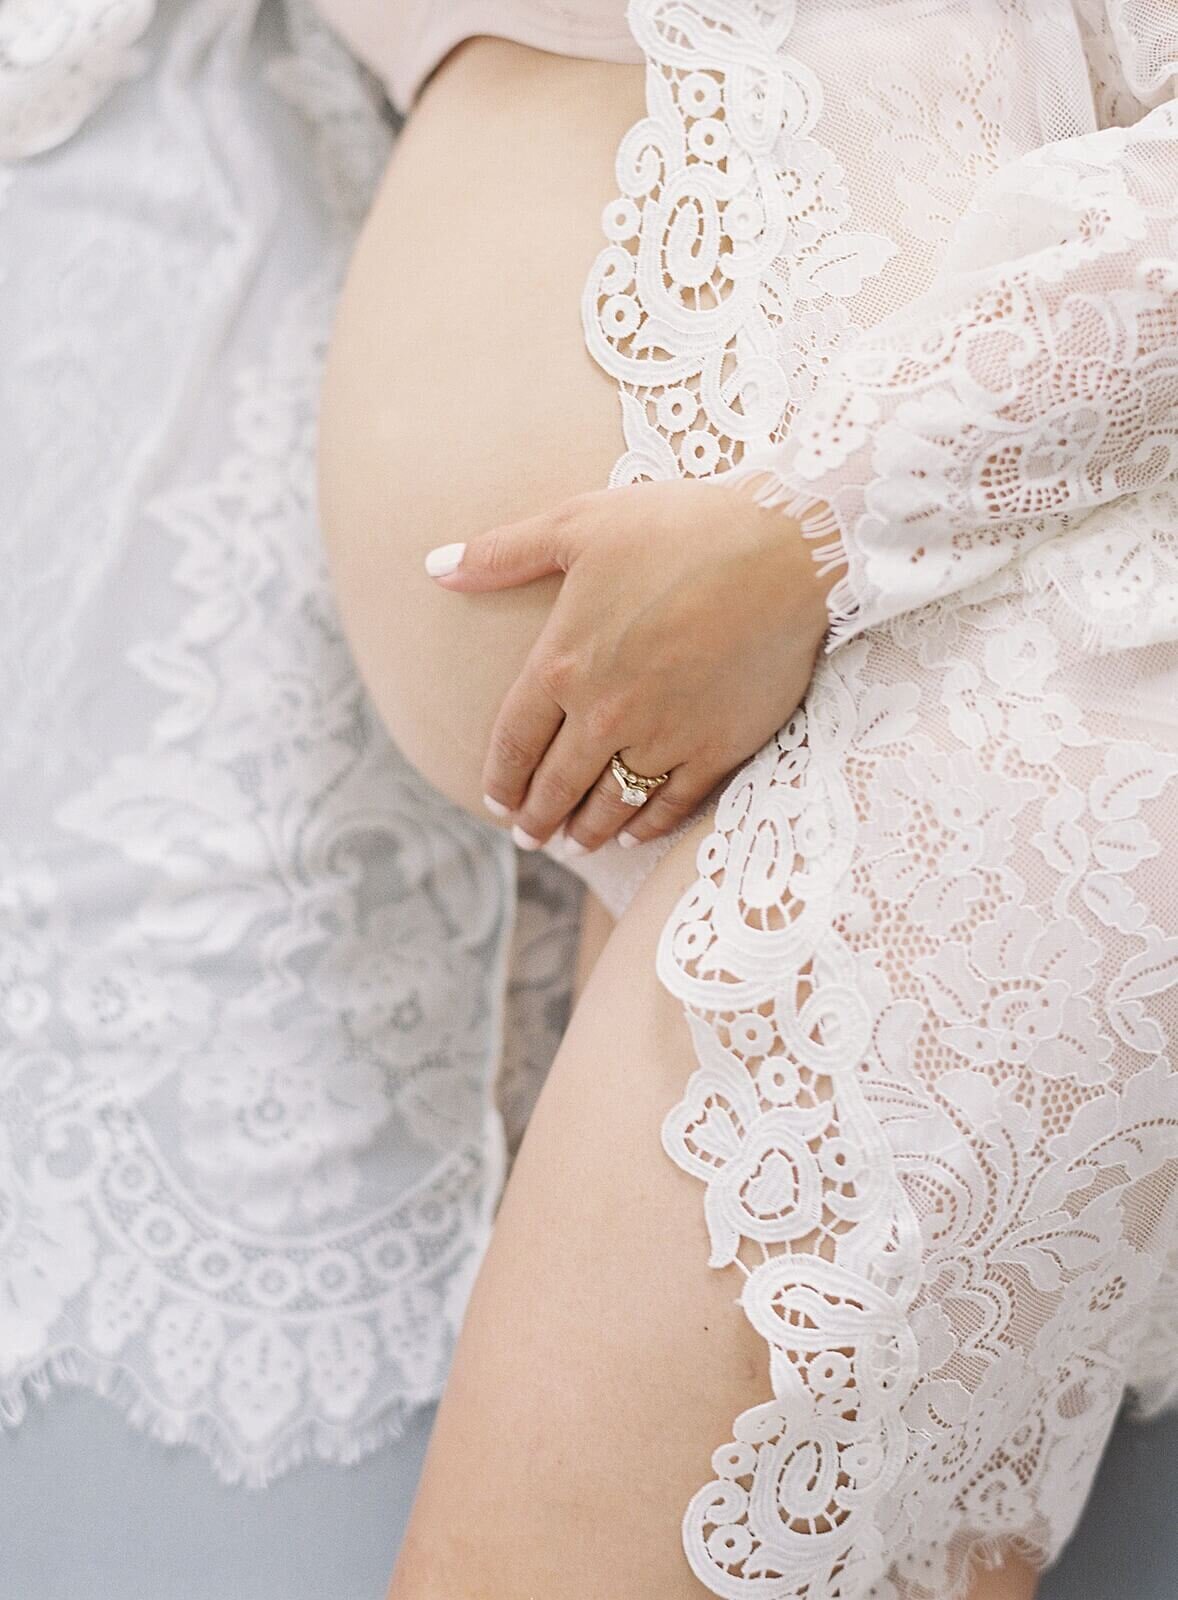 seattle-maternity-photographer-pregnancy-jacqueline-benet_0007